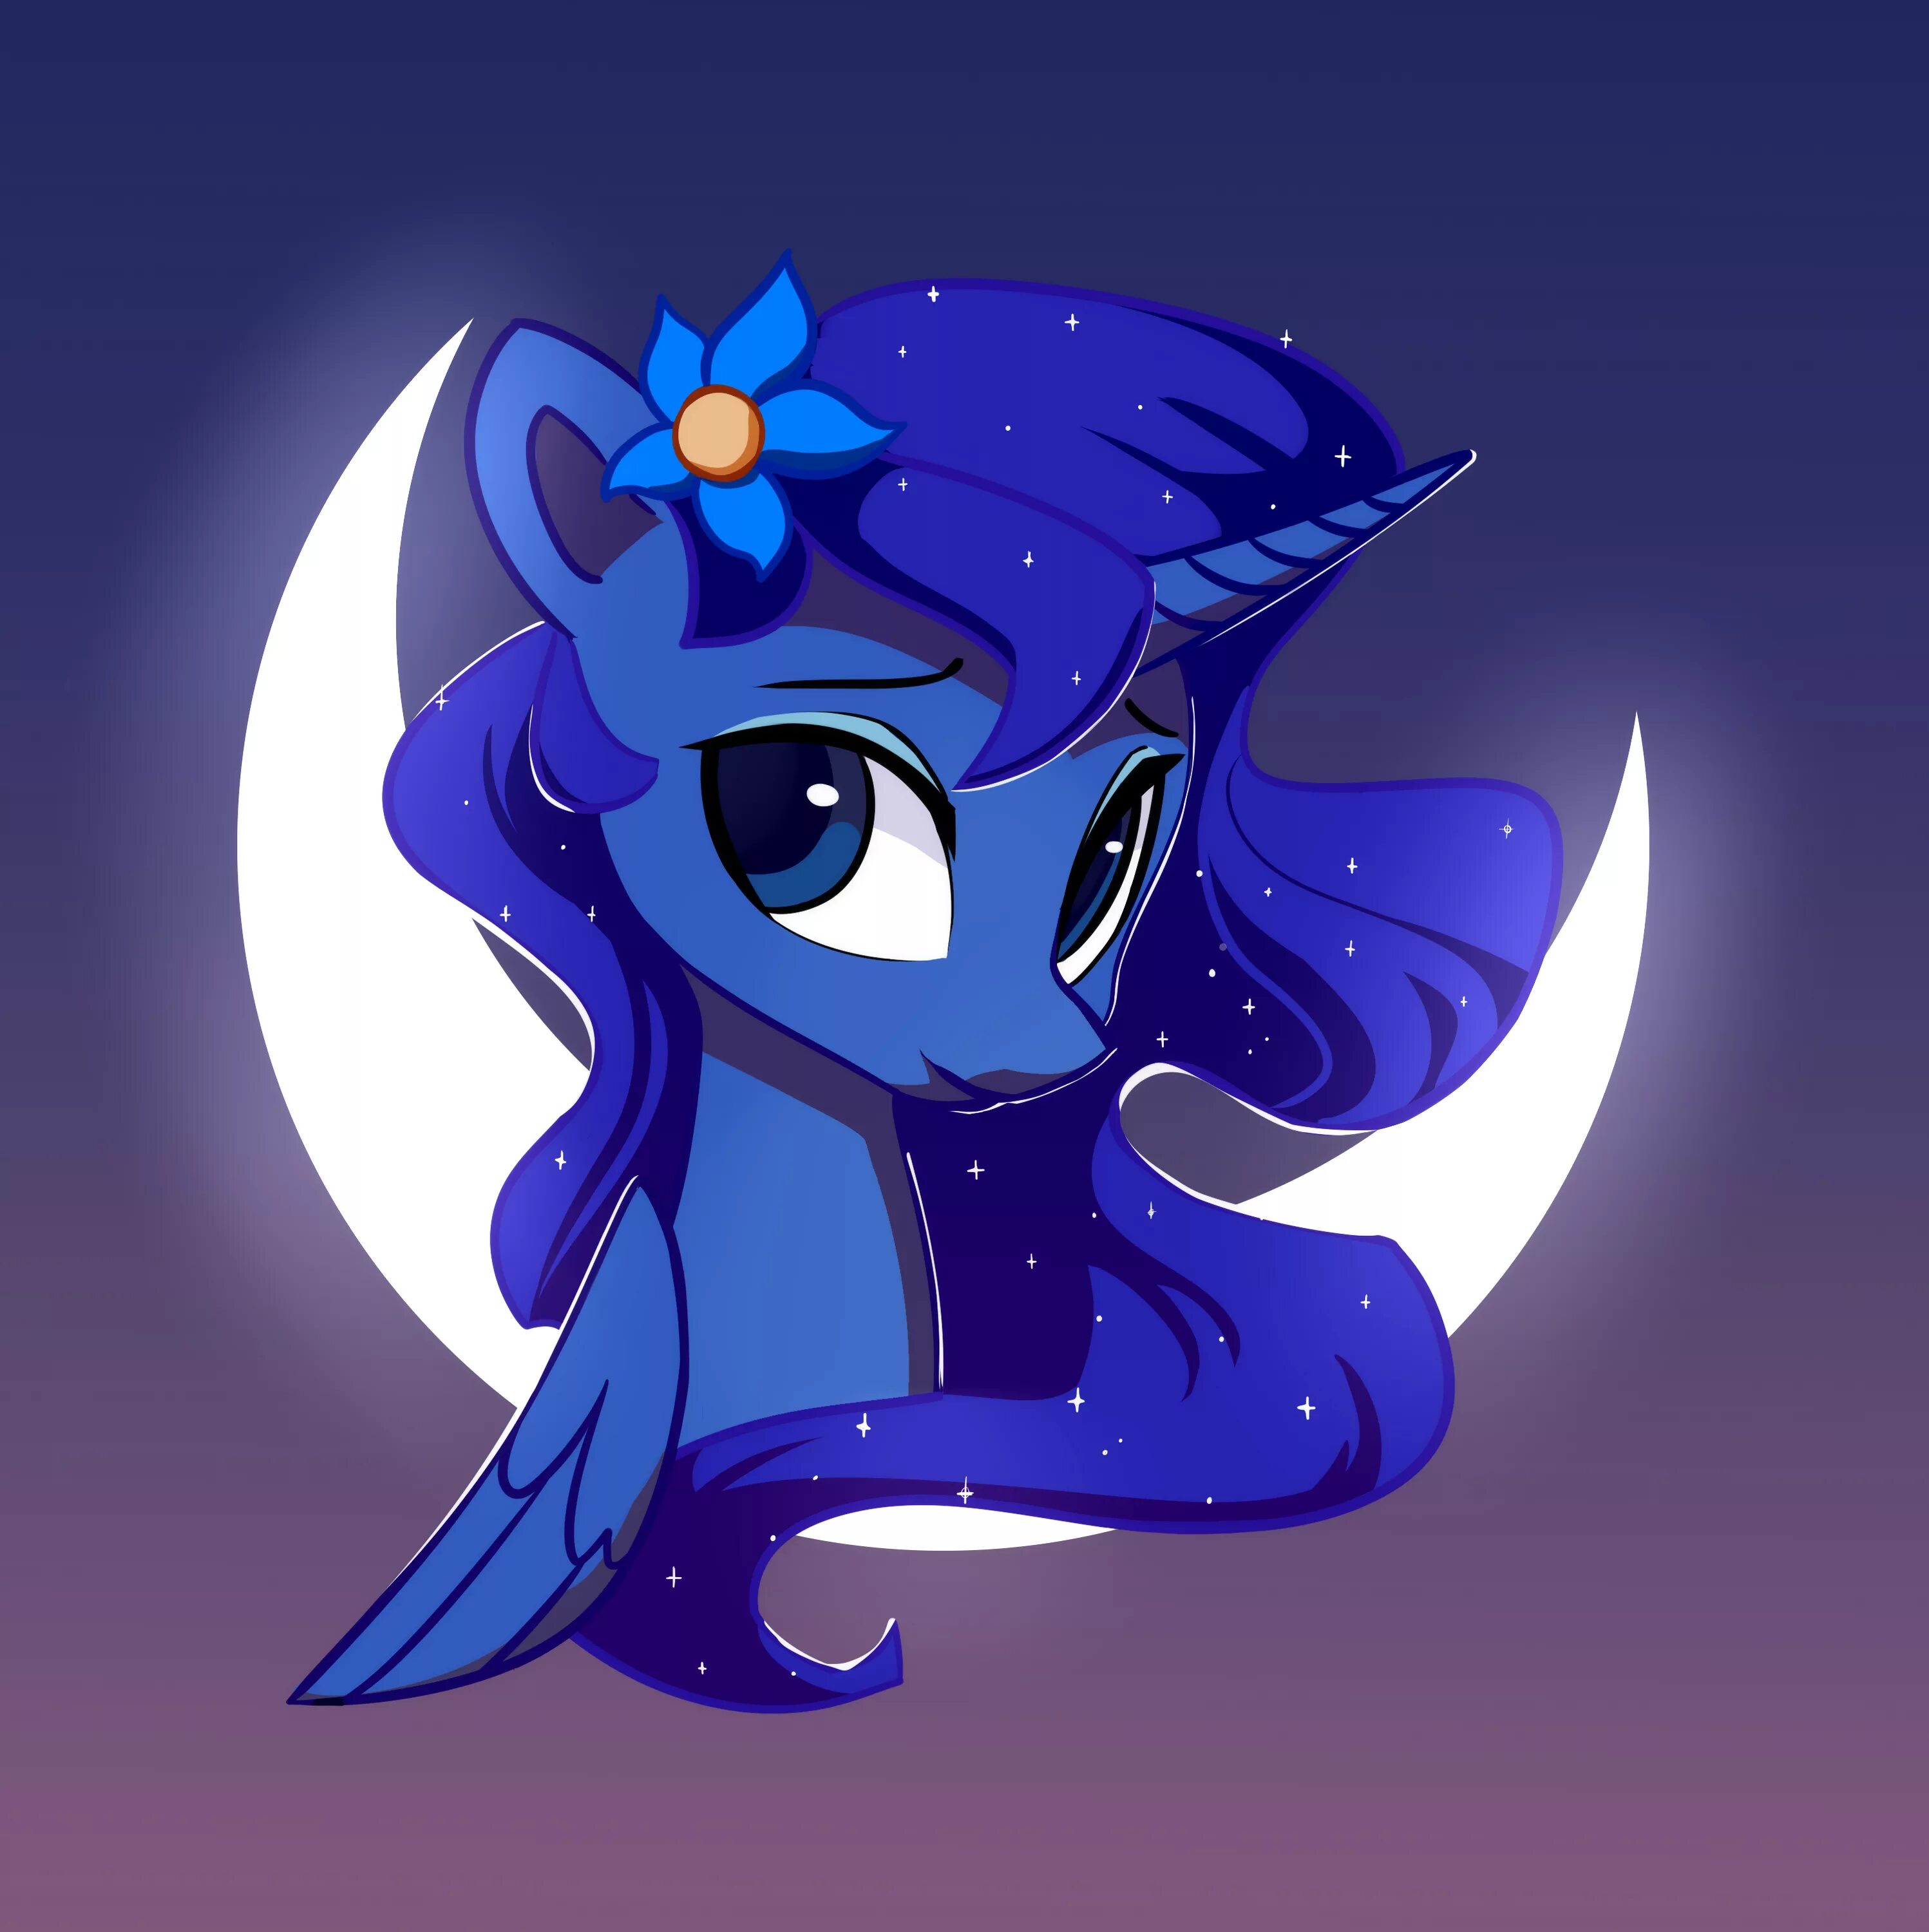 My little pony принцесса луна. МЛП принцесса Луна маленькая. Принцесса Луна май Лито пони. Луна МЛП. Принцесса Луна из МЛП.